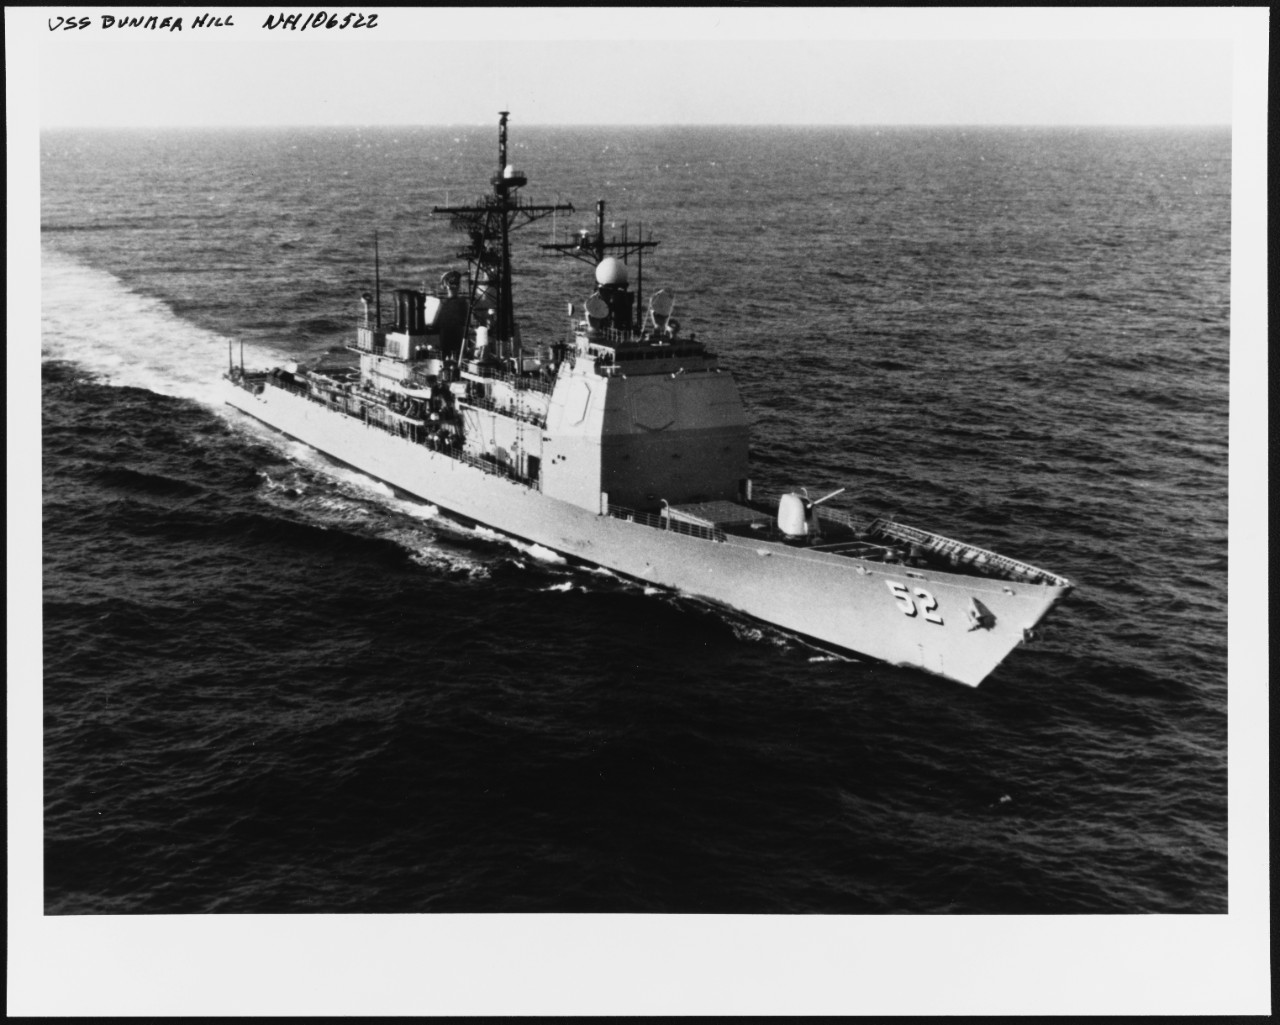 Photo # NH 106522  USS Bunker Hill